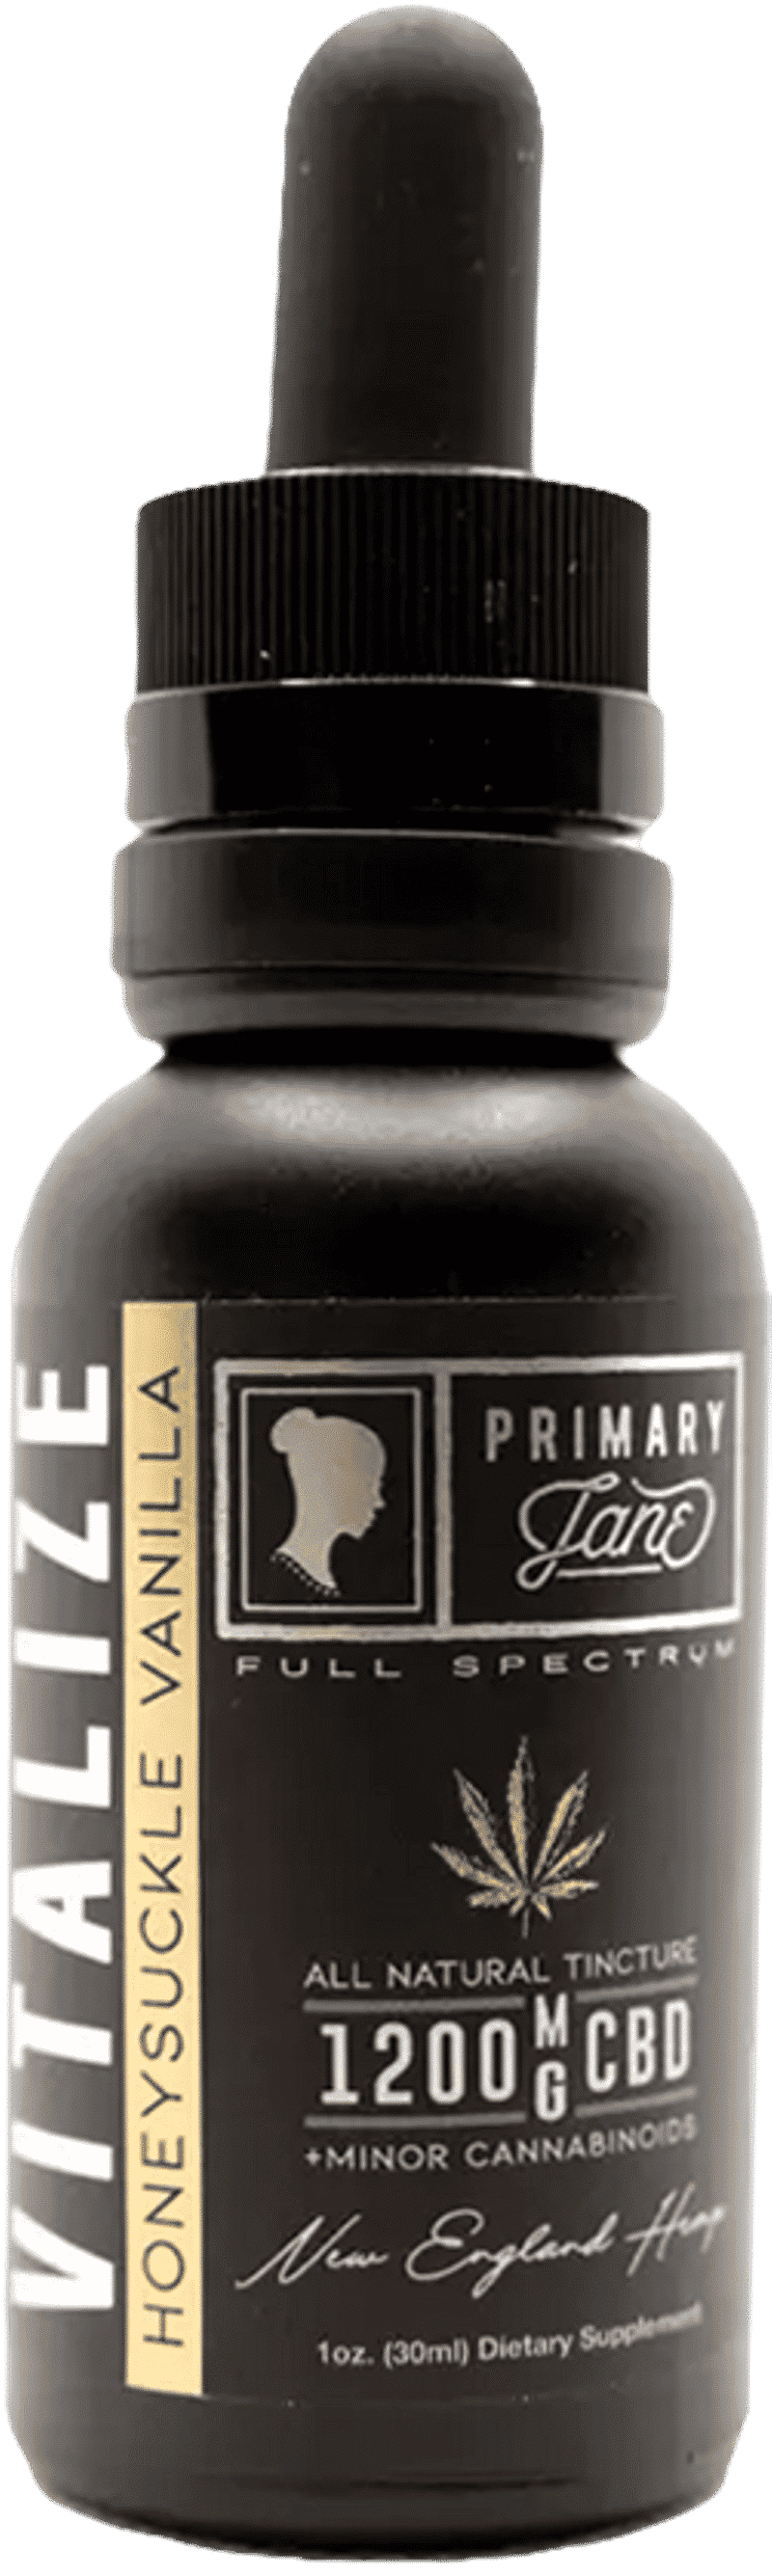 vitalize cbd oil primary jane 1200mg honeysuckle vanilla